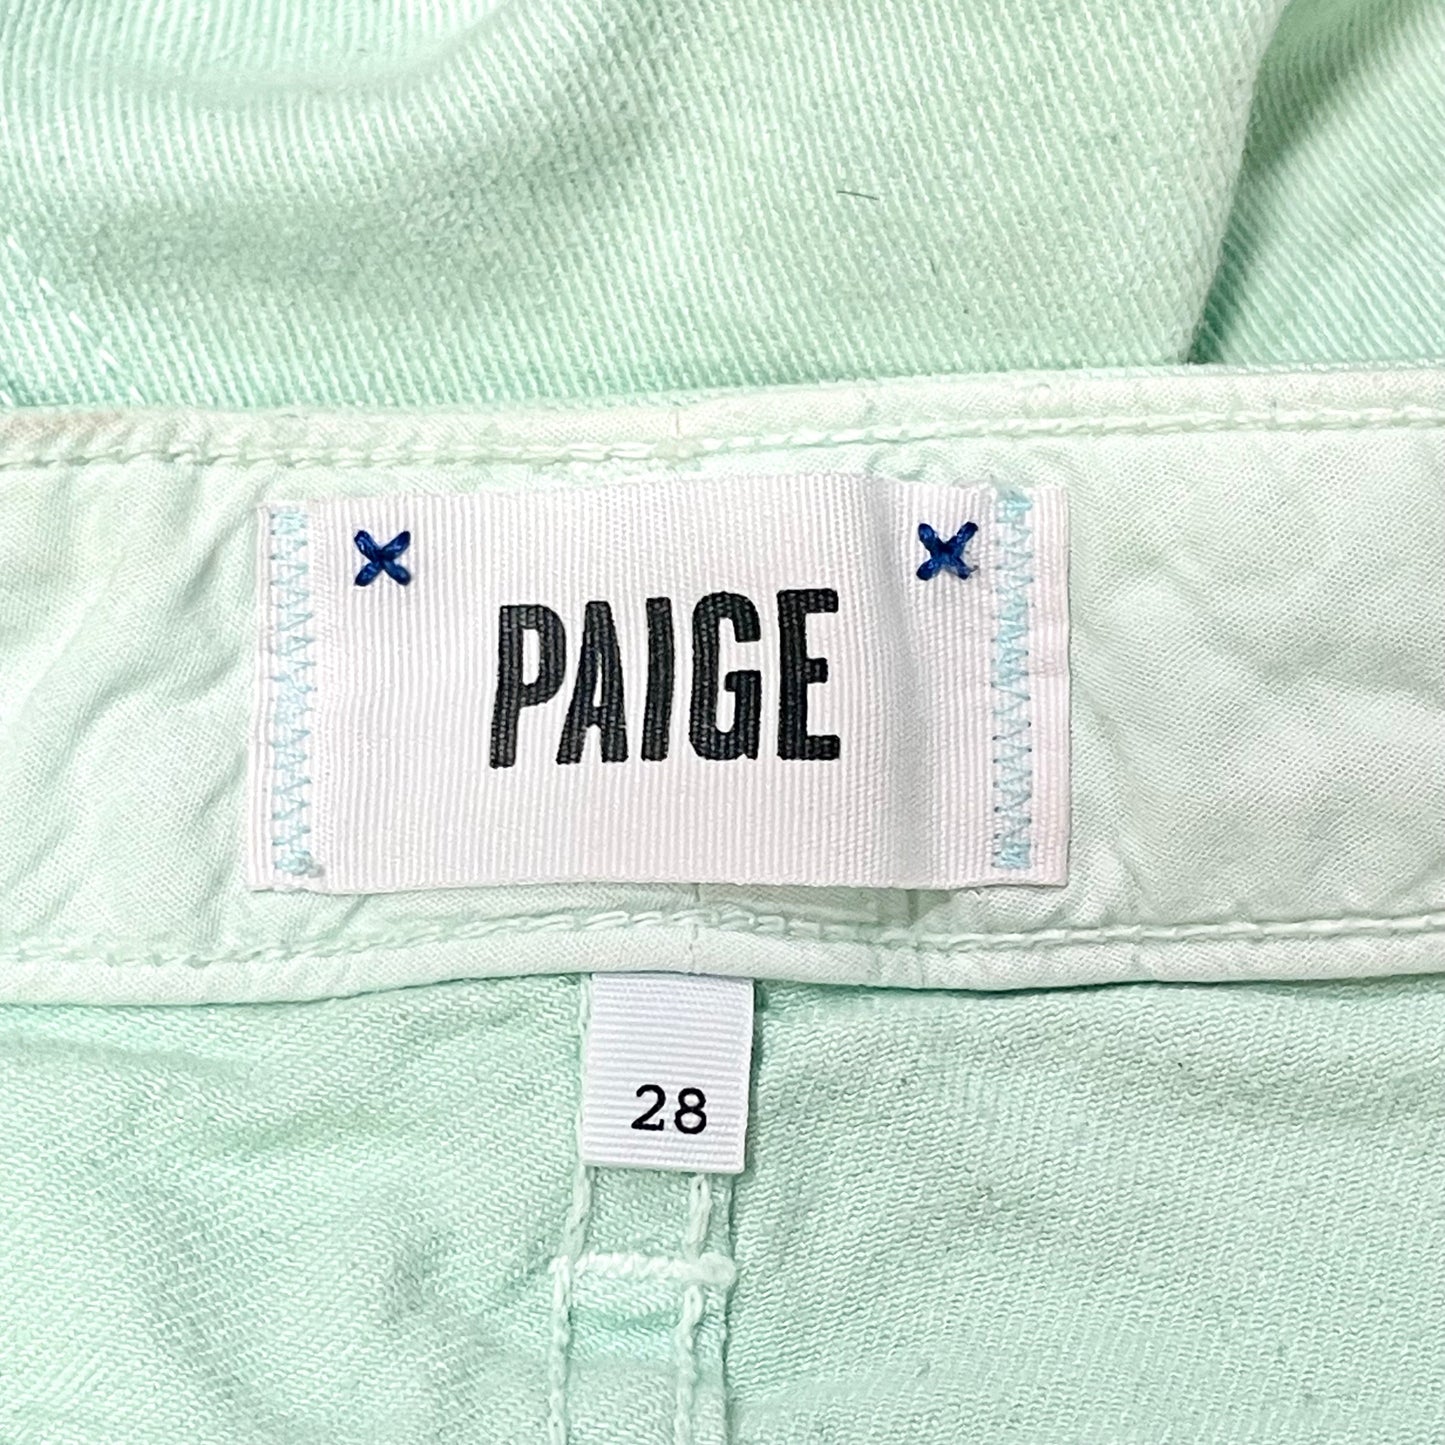 Shorts Designer By Paige  Size: 6